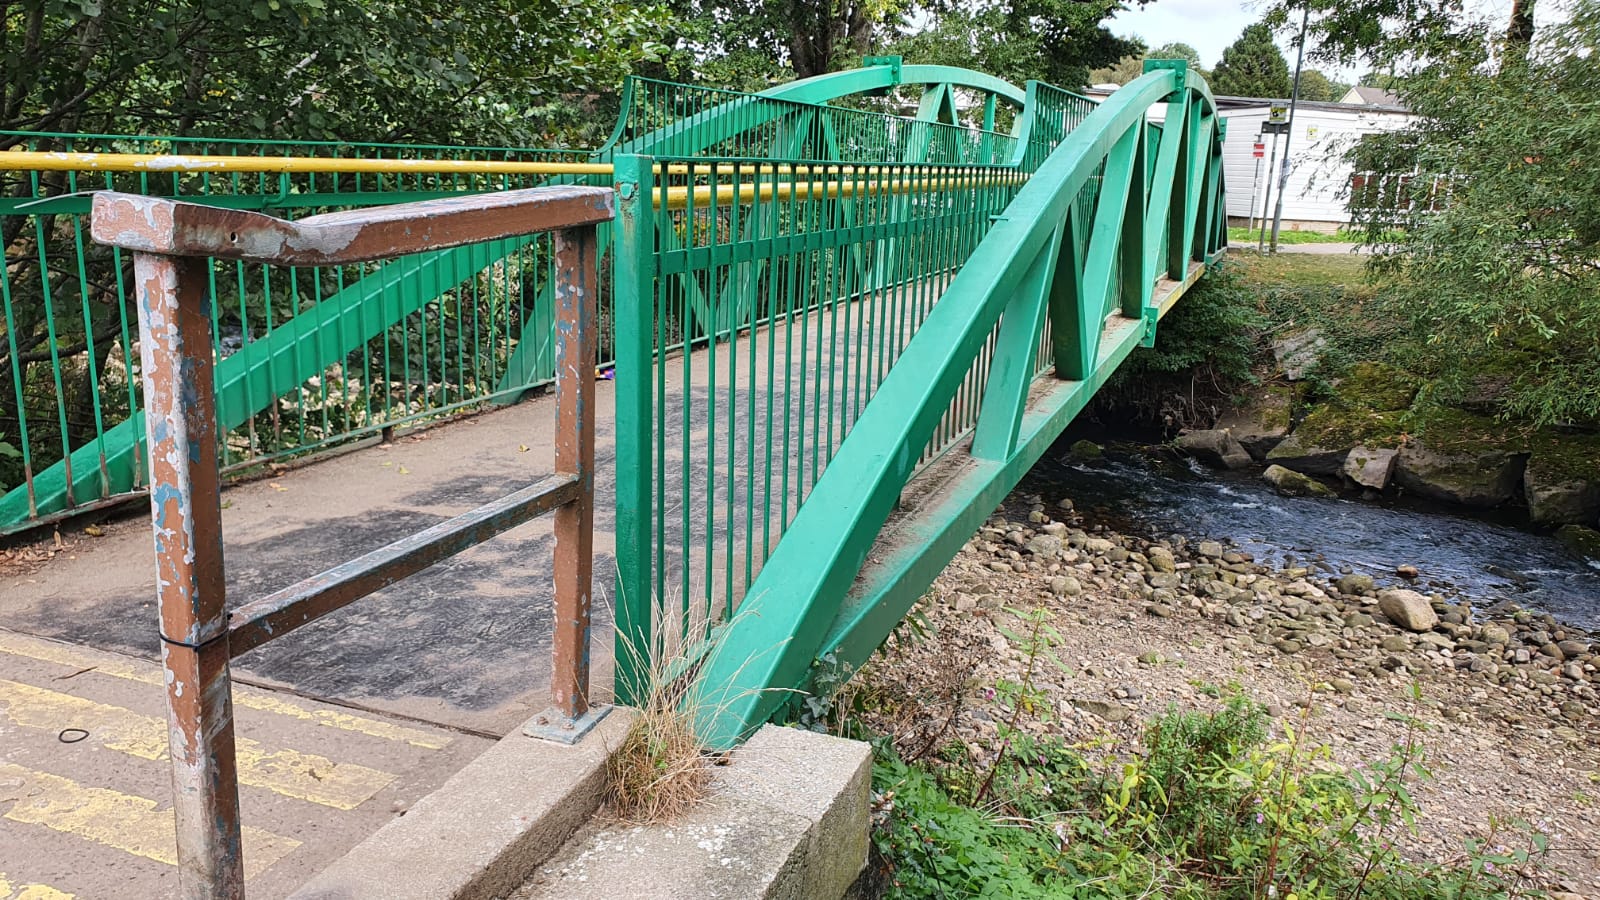 A footbridge